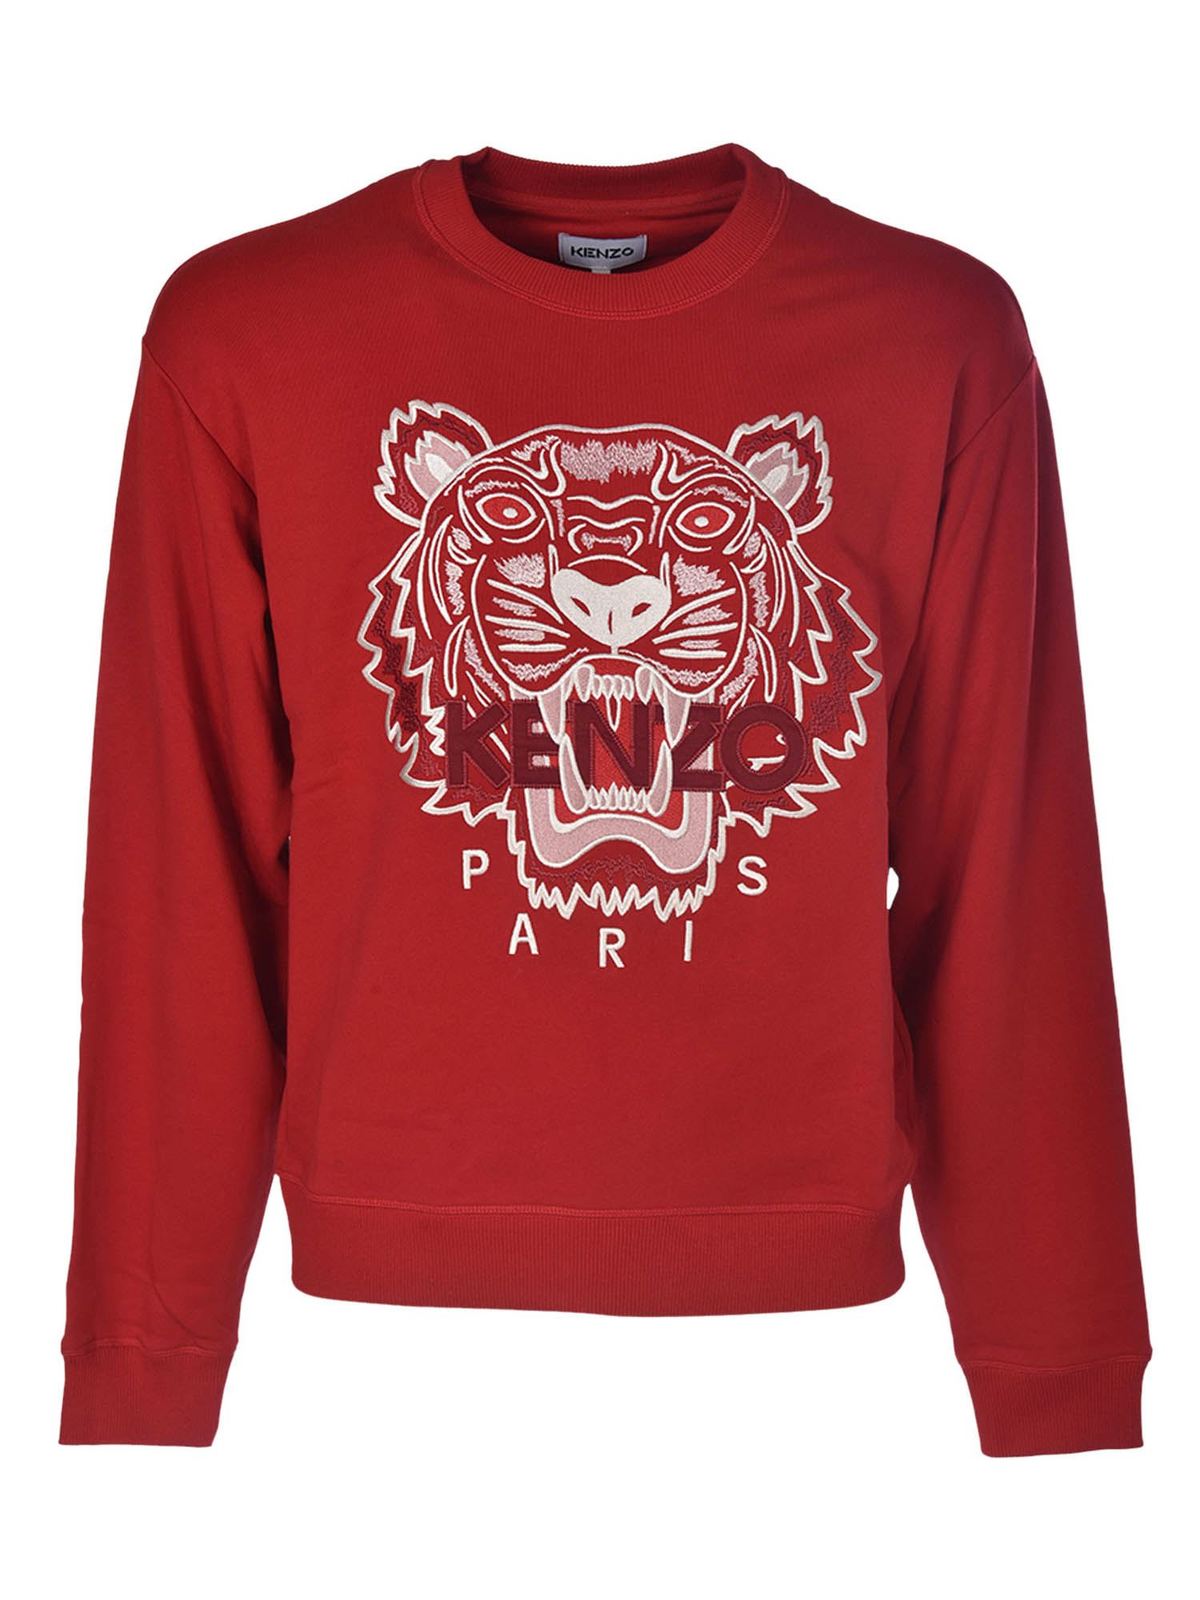 Kenzo - Classic Tiger sweatshirt in red 